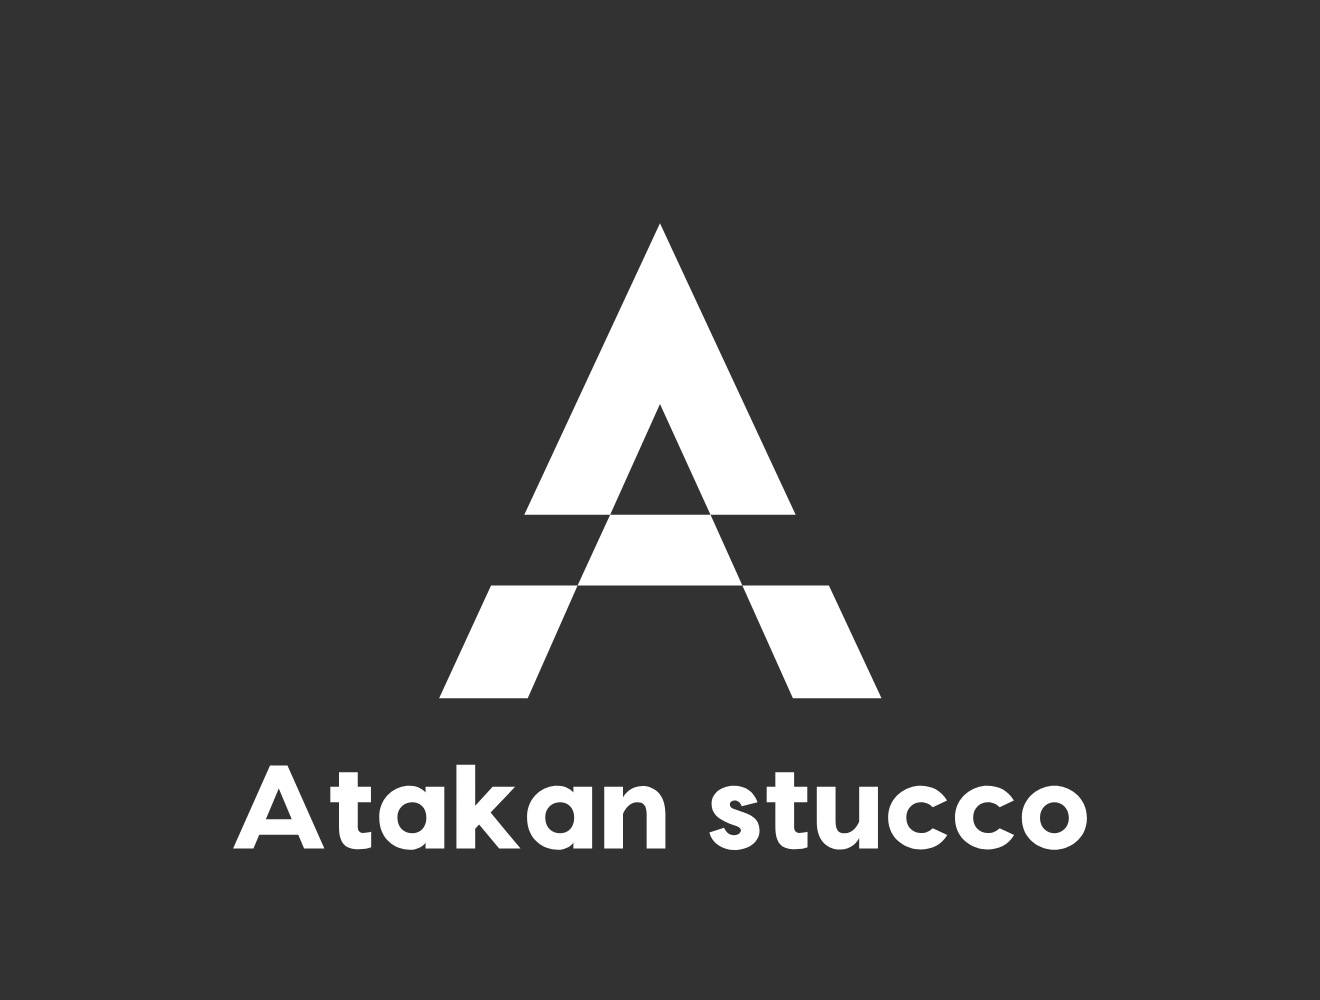 Atakan Stucco Ltd's logo